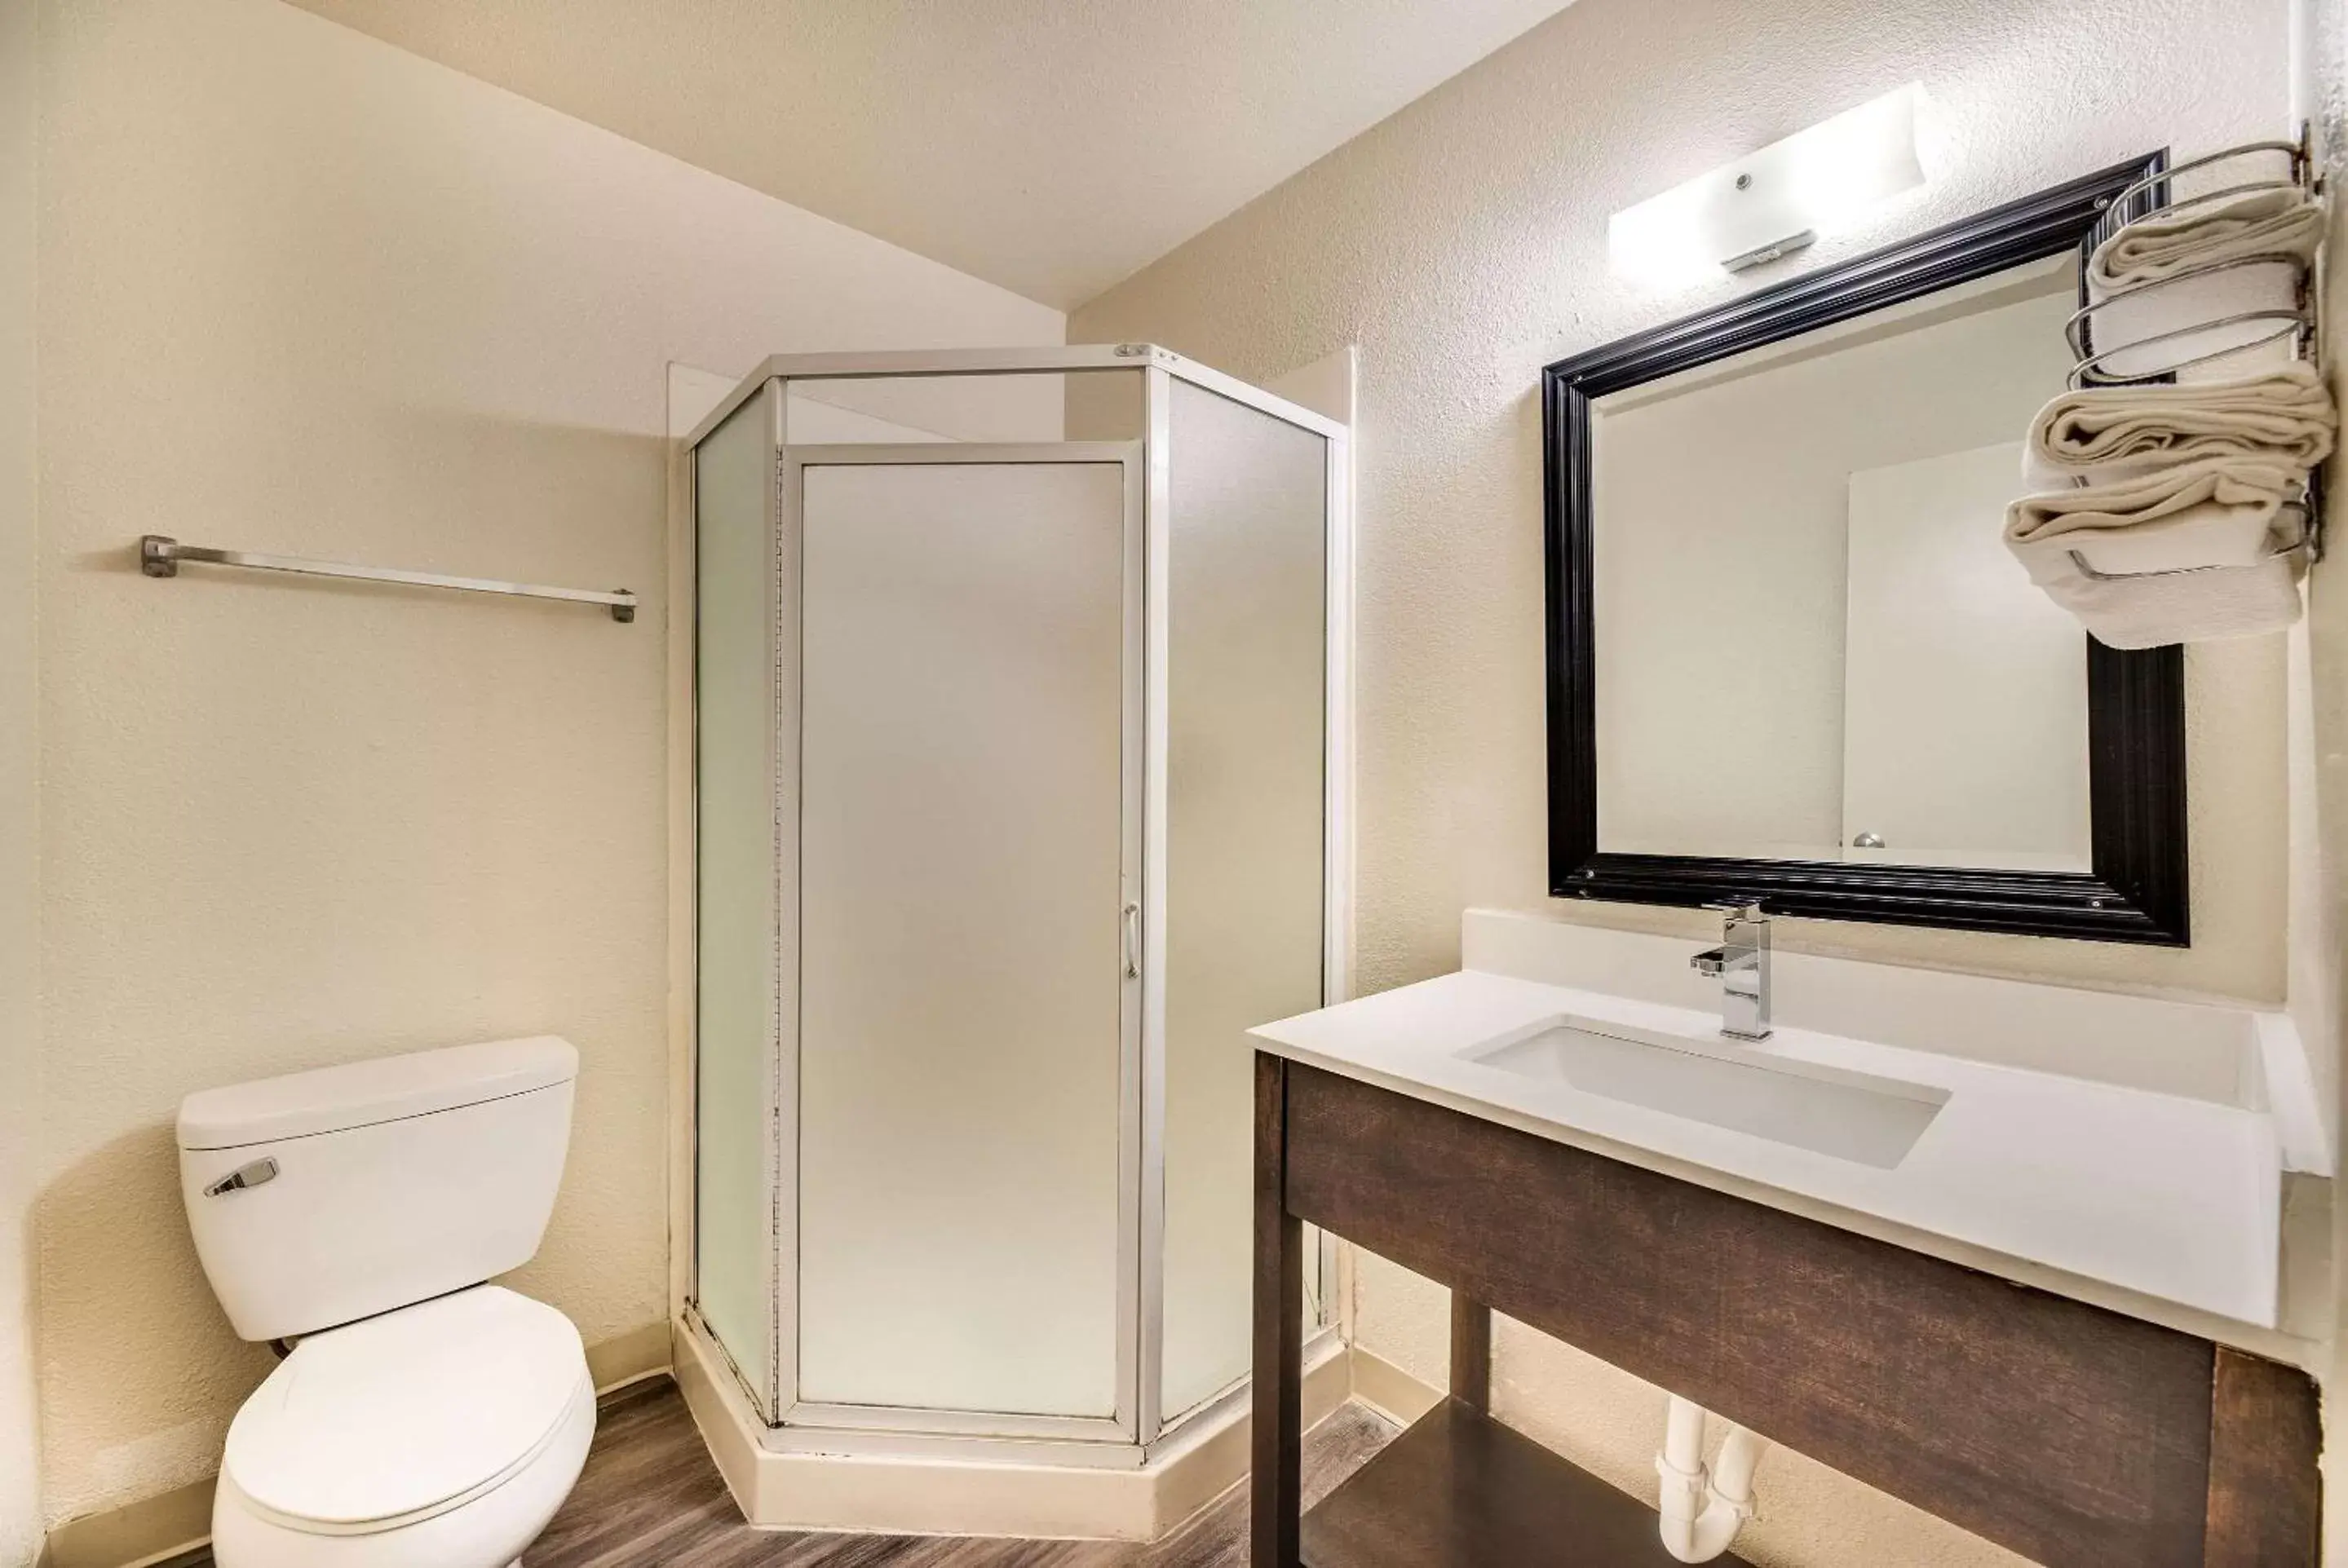 Bedroom, Bathroom in Econo Lodge Stockton near I-5 Fairgrounds